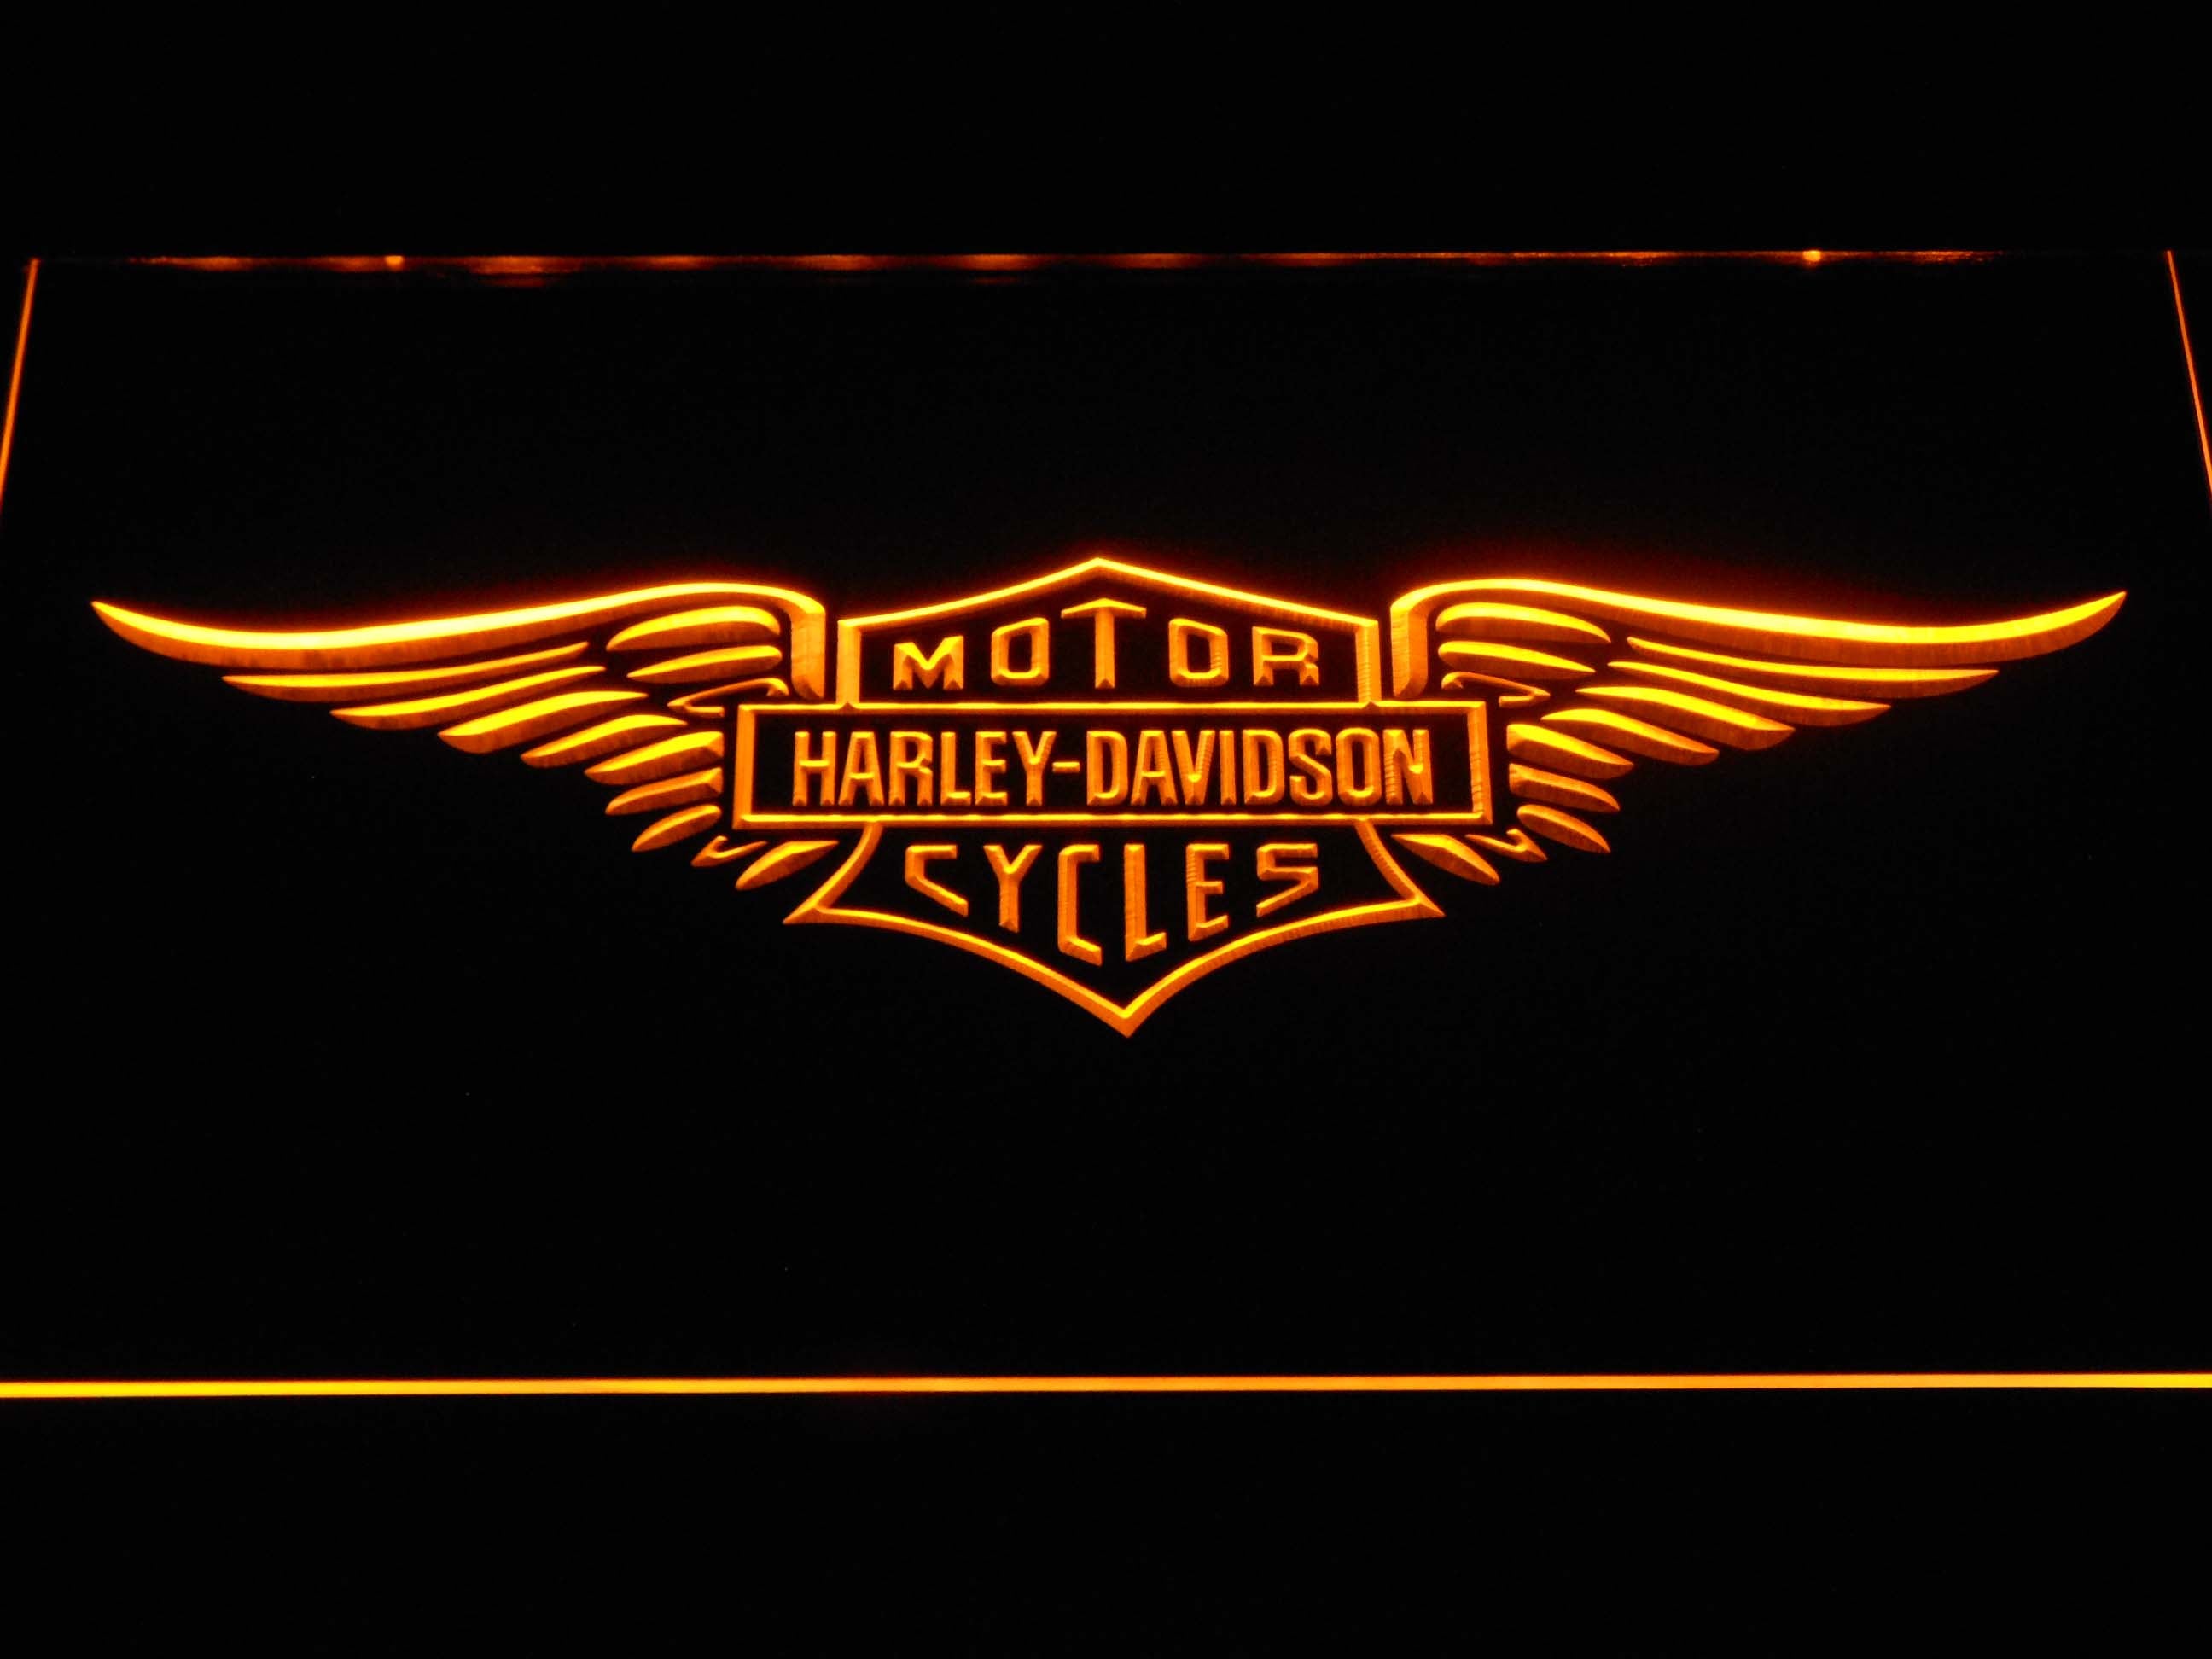 Harley Davidson Eagles MotorCycles Neon Light LED Sign